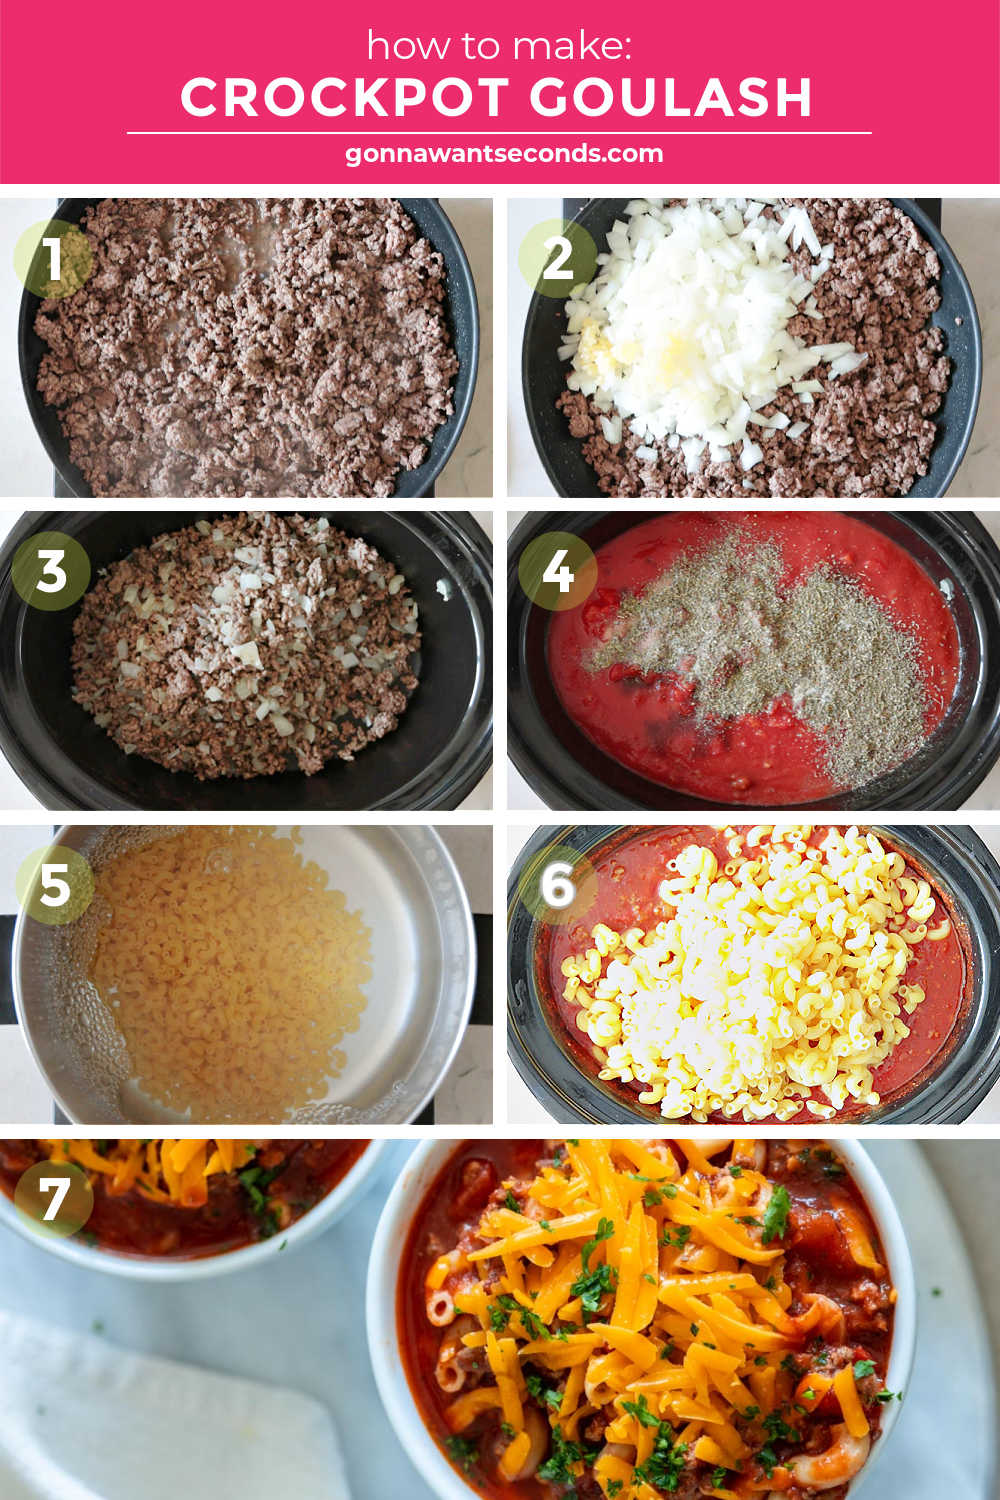 Step by step how to make crockpot goulash